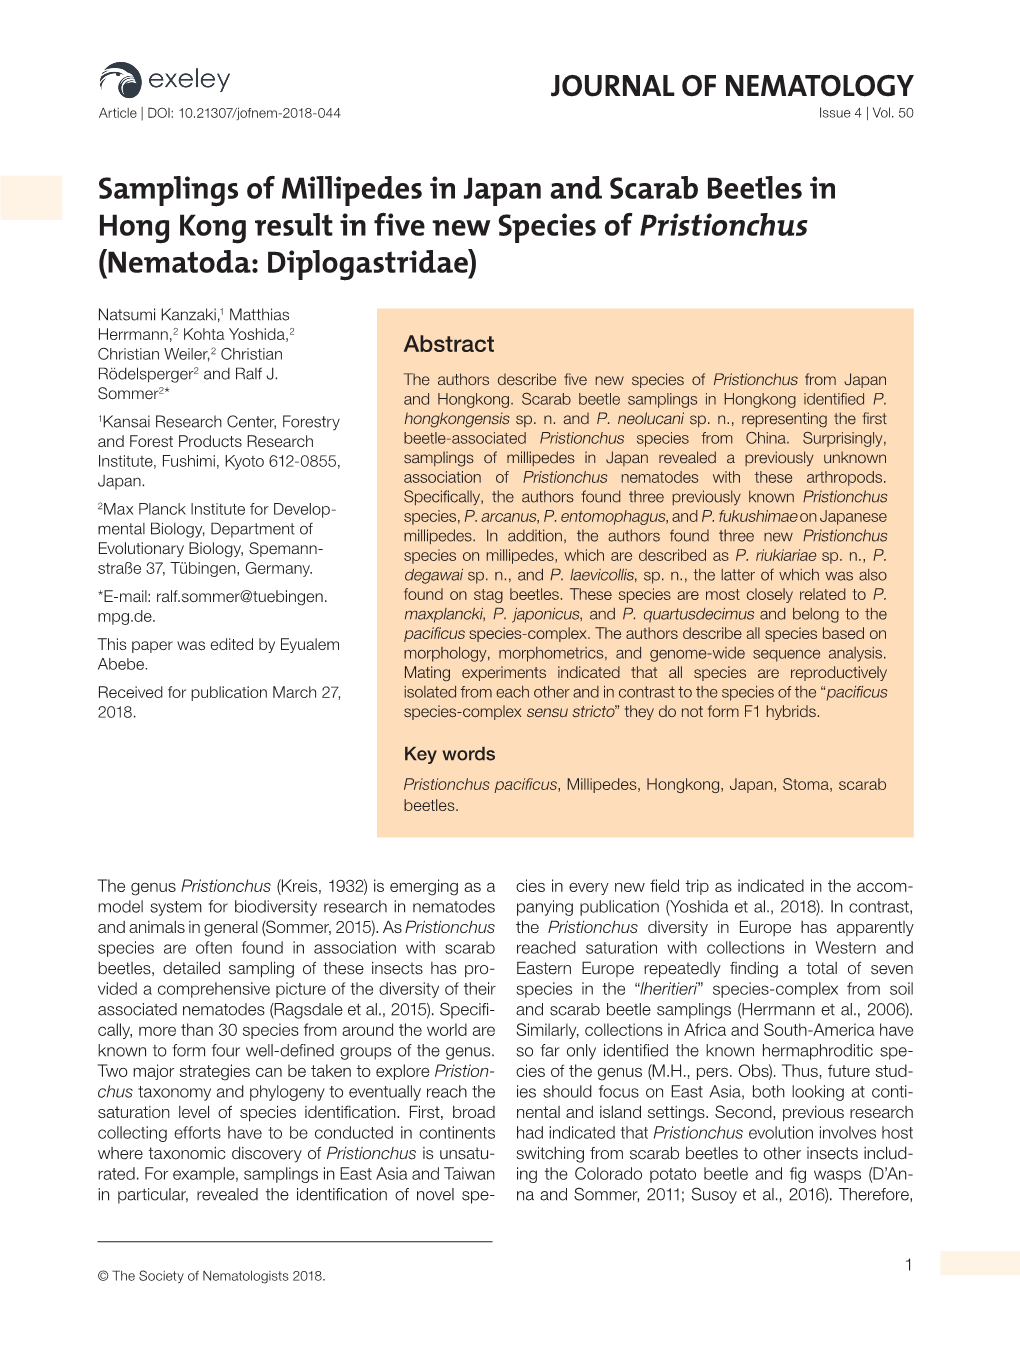 Samplings of Millipedes in Japan and Scarab Beetles in Hong Kong Result in Five New Species of Pristionchus (Nematoda: Diplogastridae)